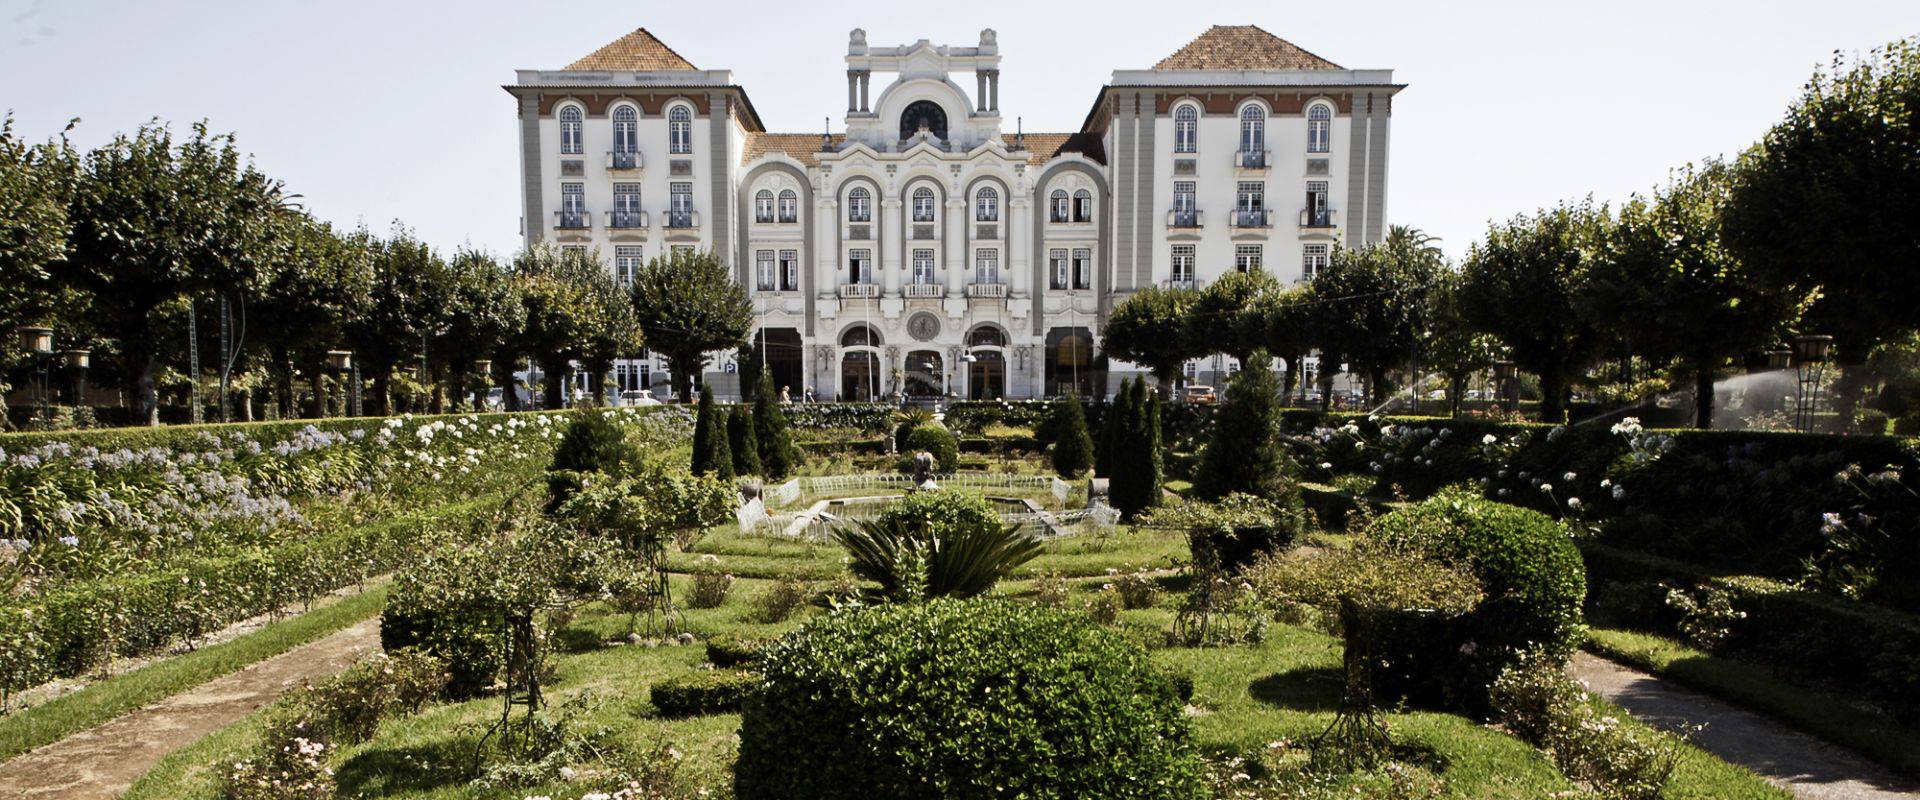   Curia Palace Hotel Coimbra